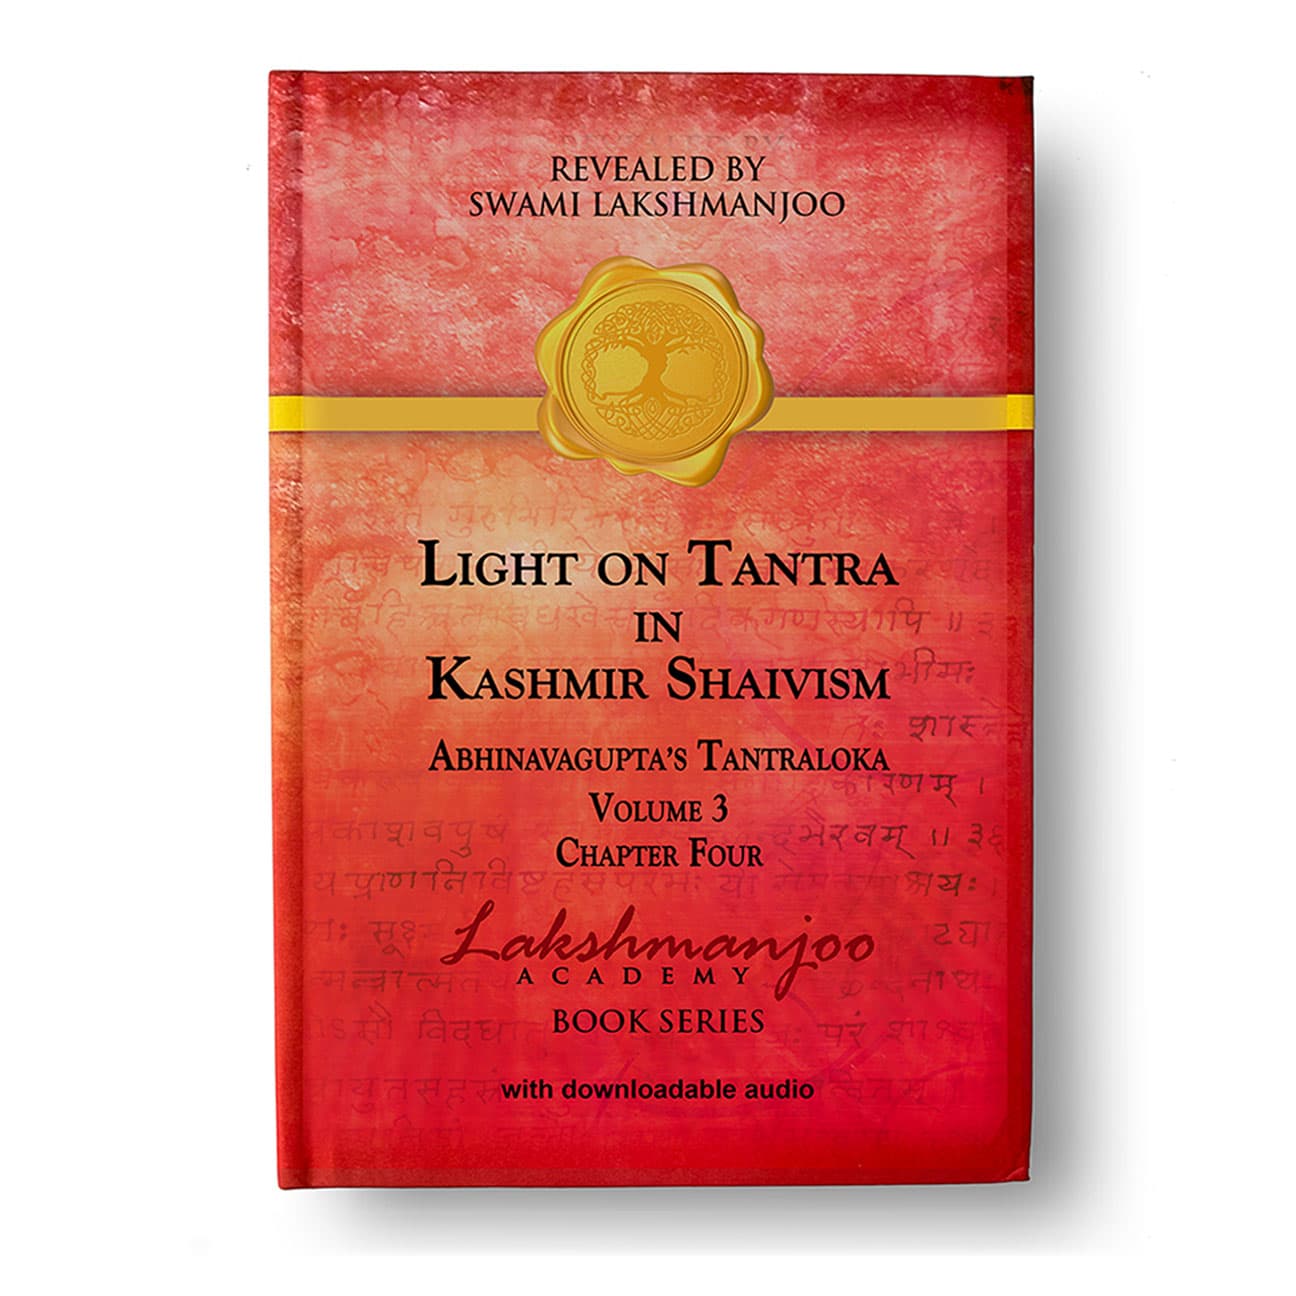 AUDIO: Light on Tantra of Kashmir Shaivism, Abhinavagupta's Tantraloka Volume 3, Chapter Four